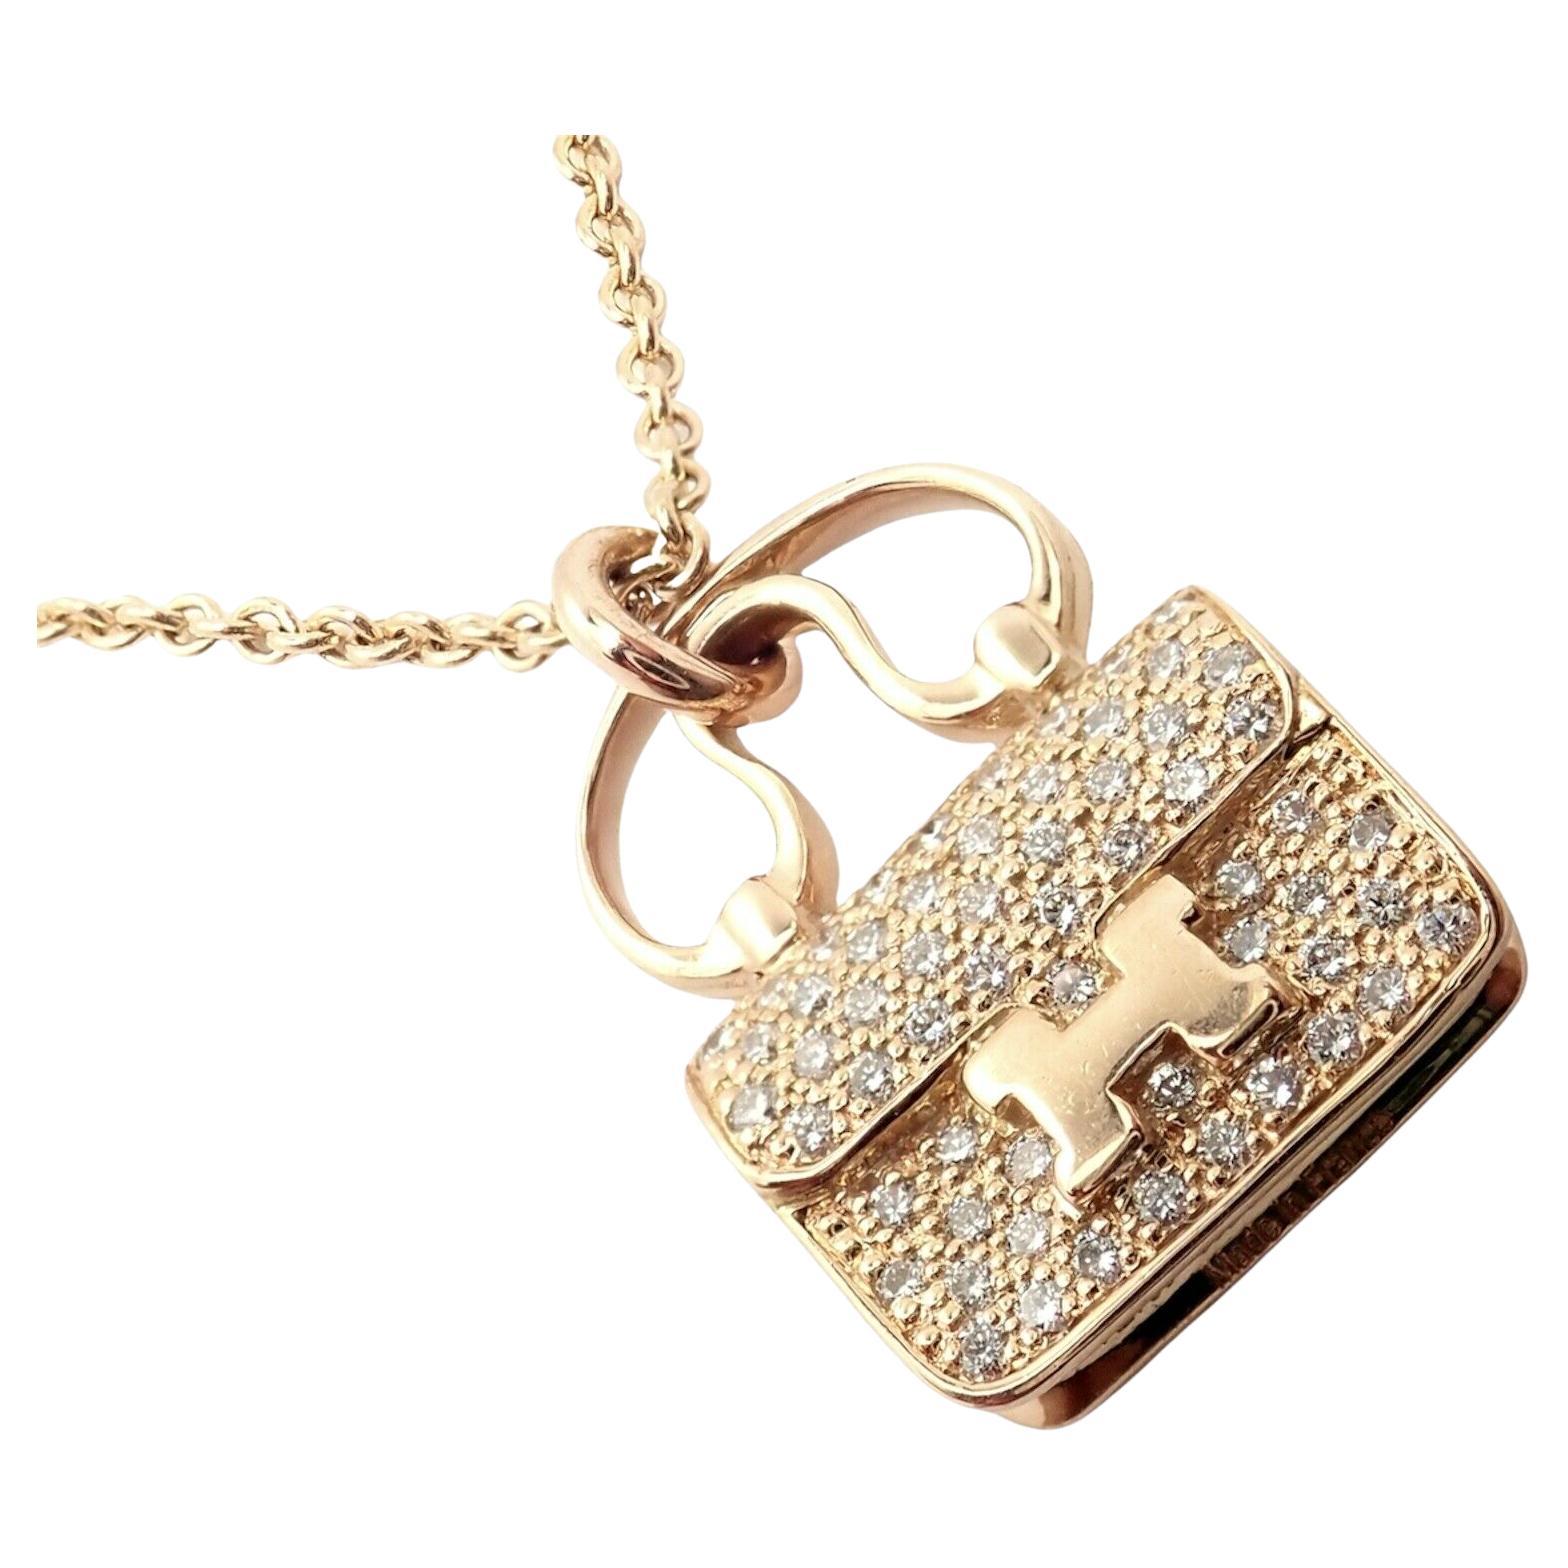 Hermes 24cm Rose Jaipur Epsom Leather Gold Plated Constance Bag - Yoogi's  Closet